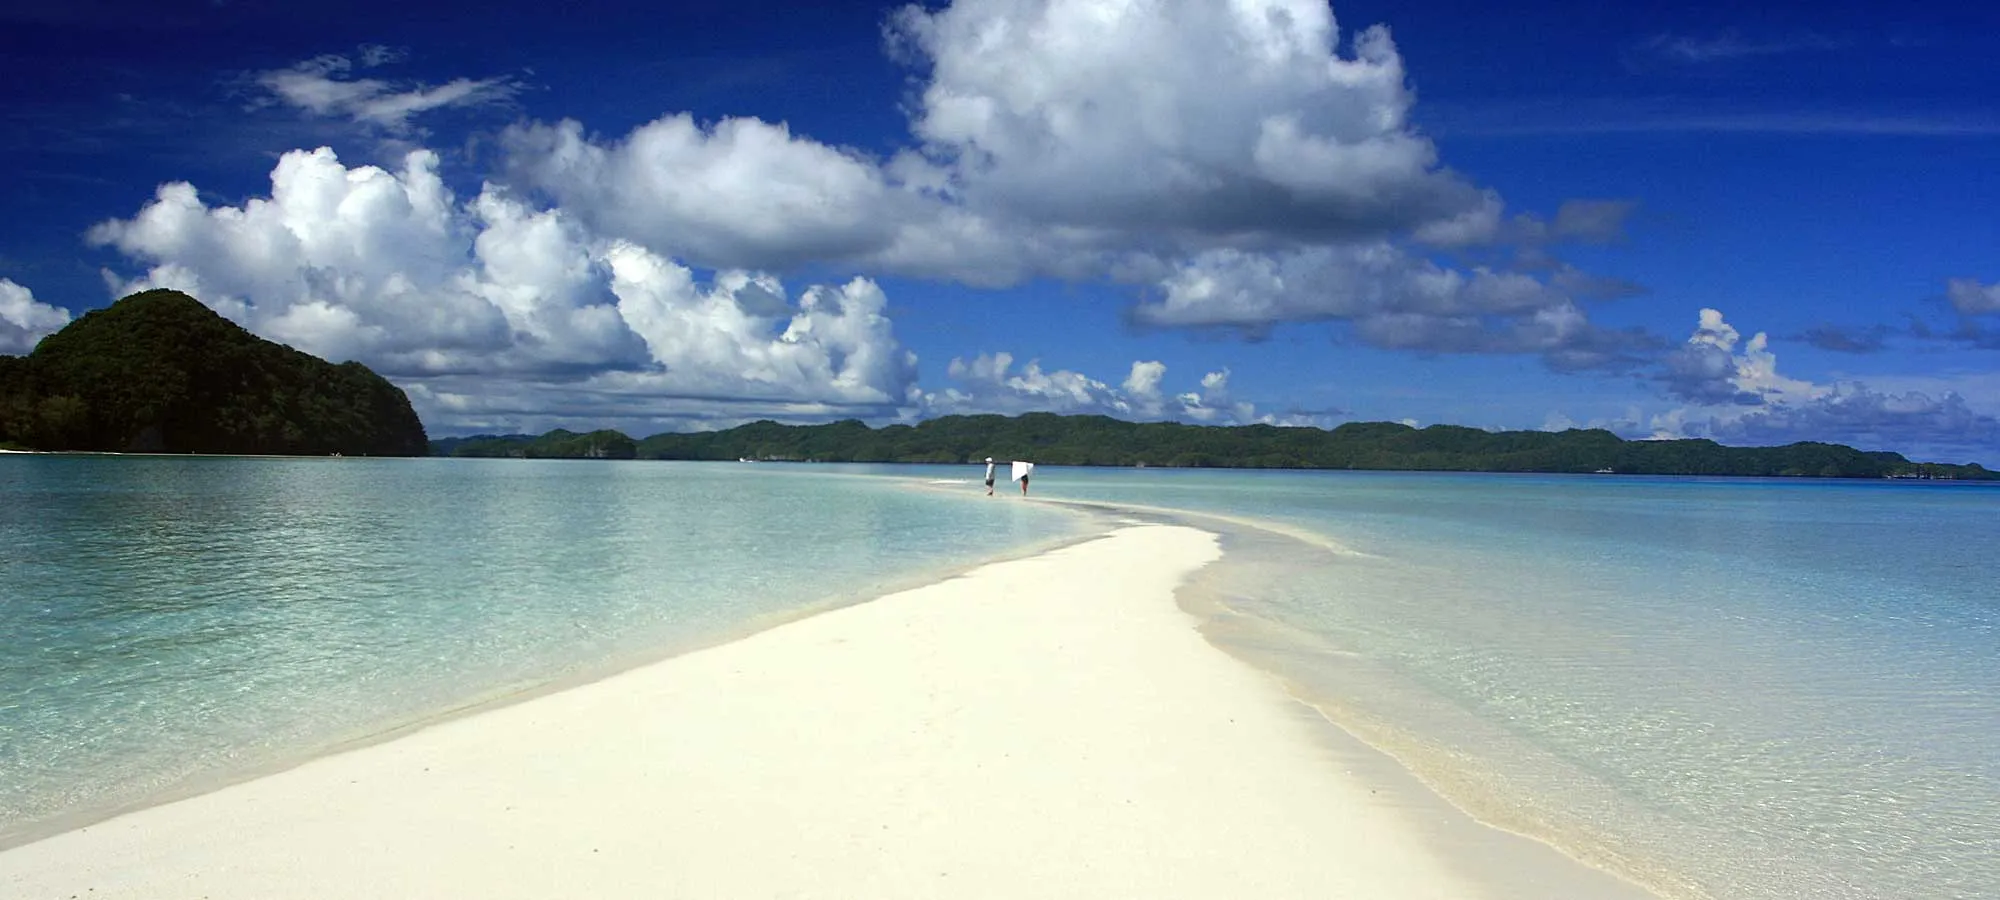 Long Beach in Palau, Australia and Oceania | Beaches - Rated 3.6